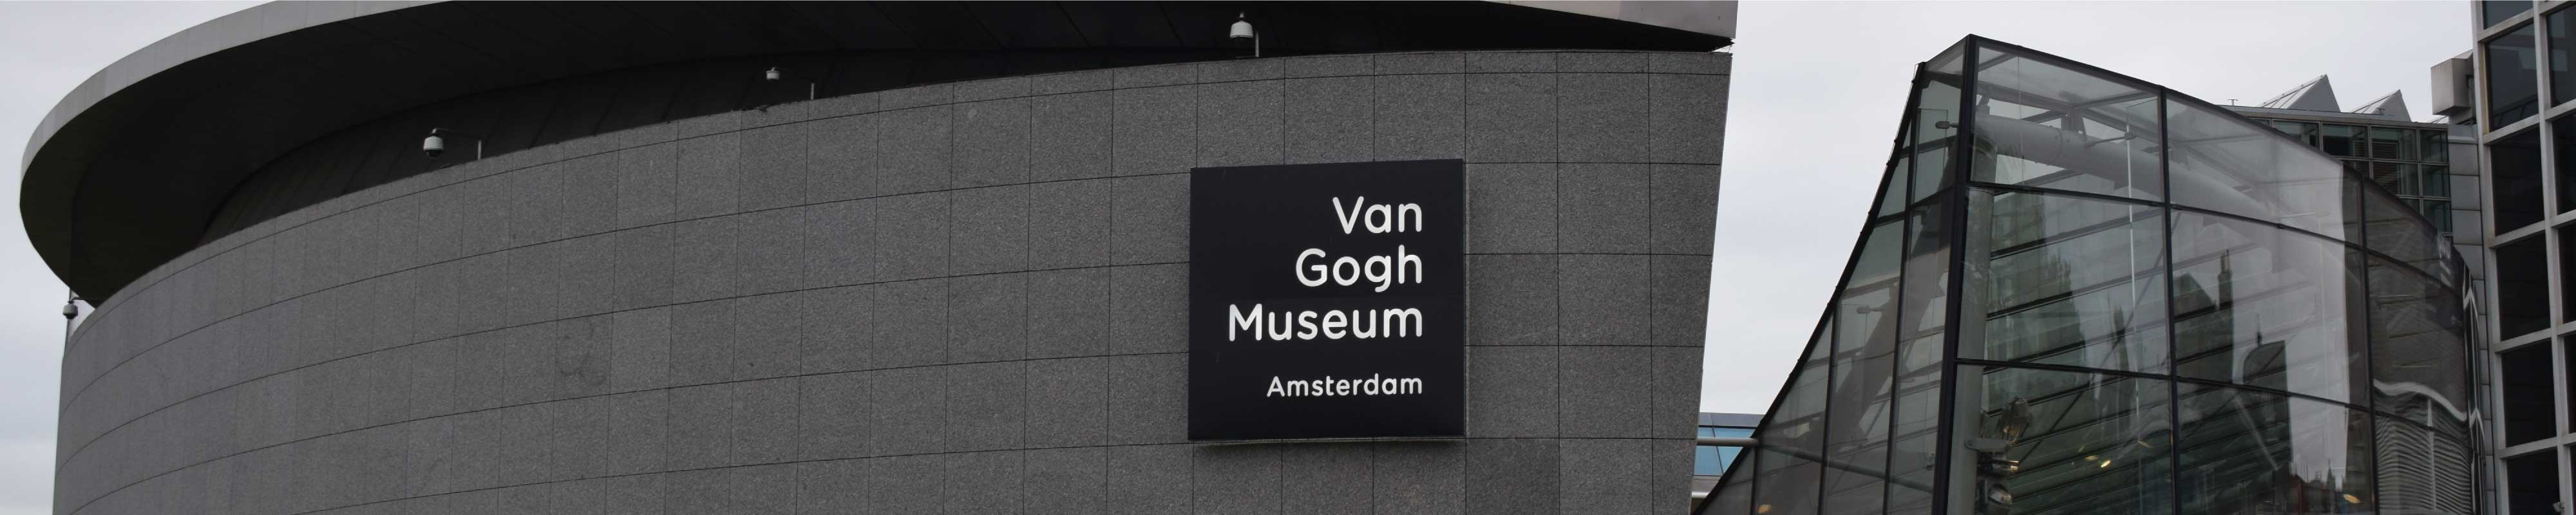 Luggage Storage | Van Gogh Museum in Amsterdam - Nannybag